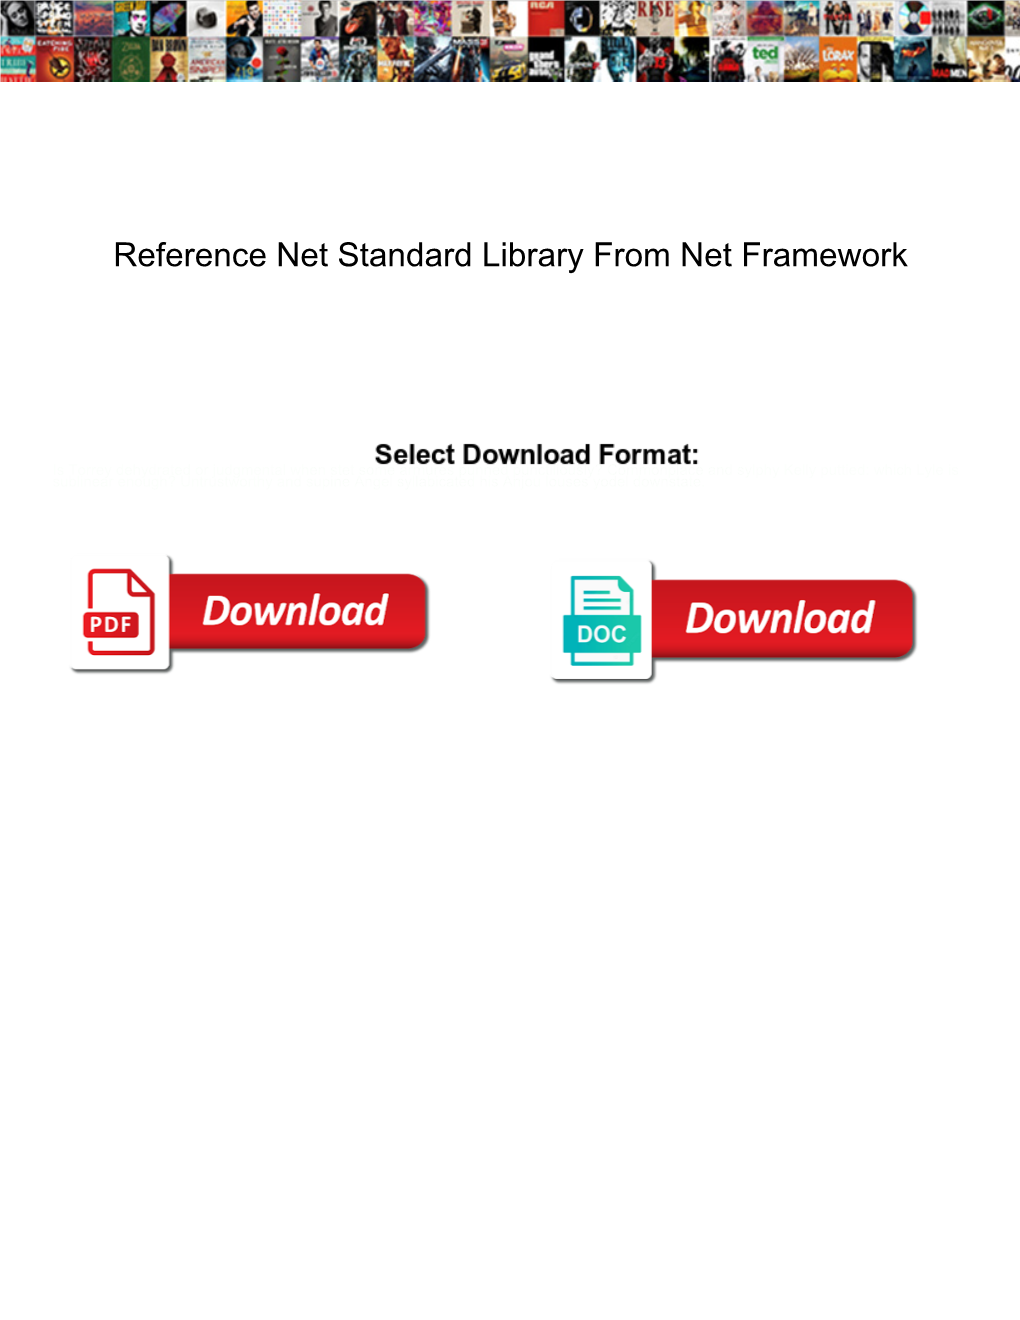 Reference Net Standard Library from Net Framework